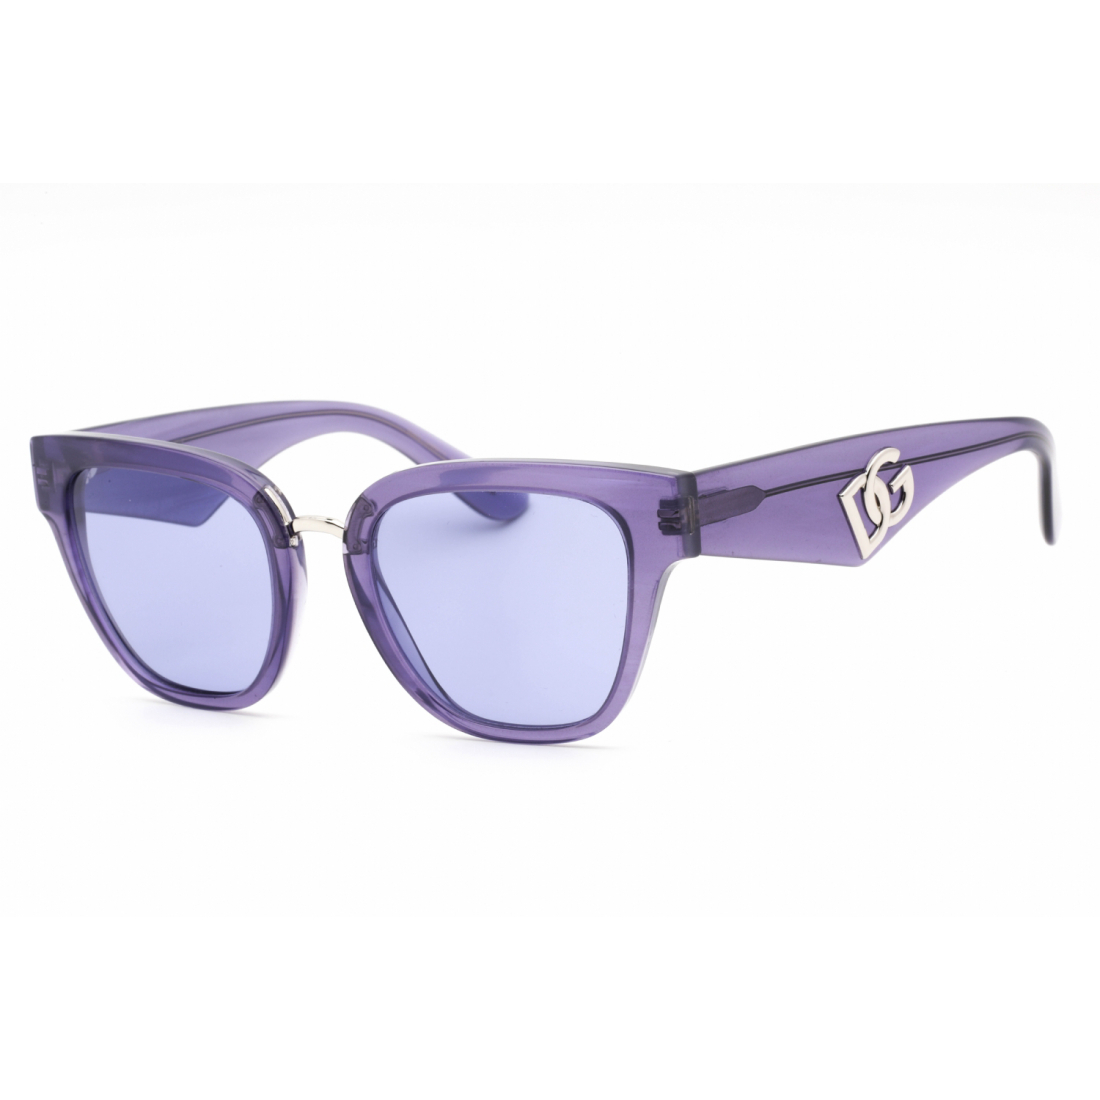 Women's '0DG4437' Sunglasses